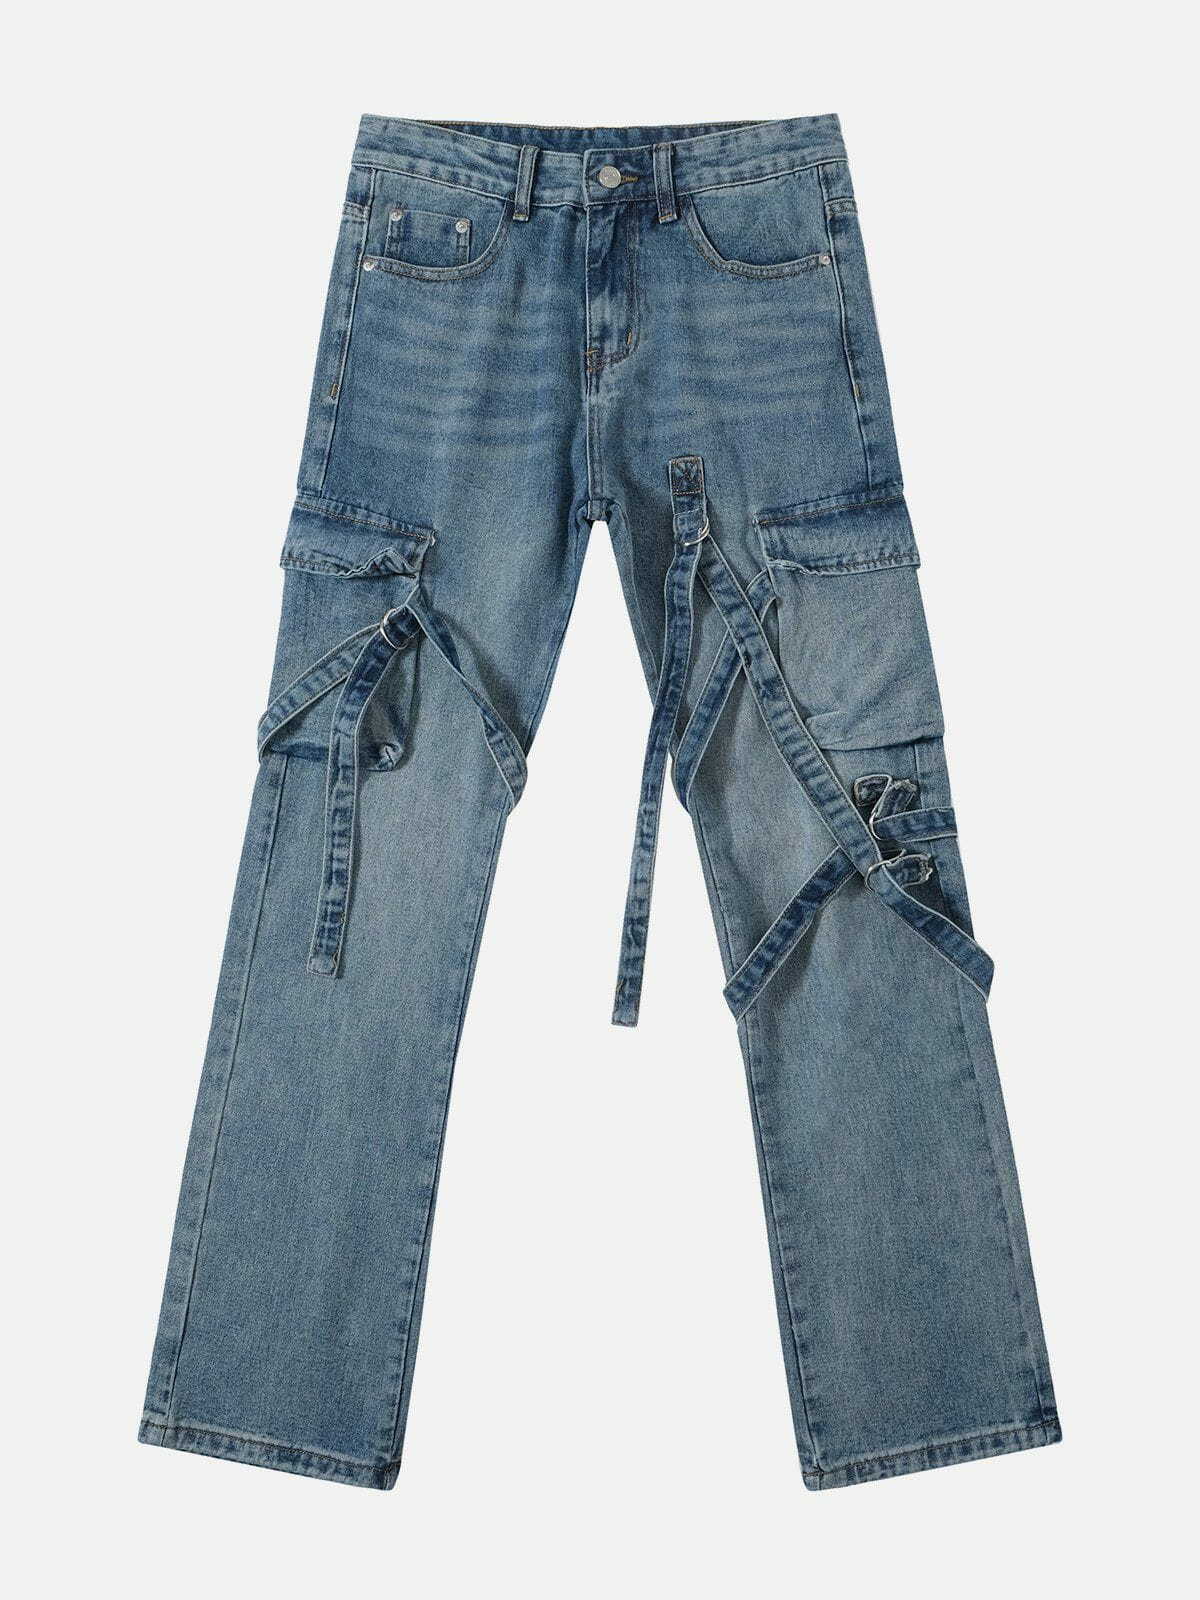 trendy tie jeans big pocket design 3997